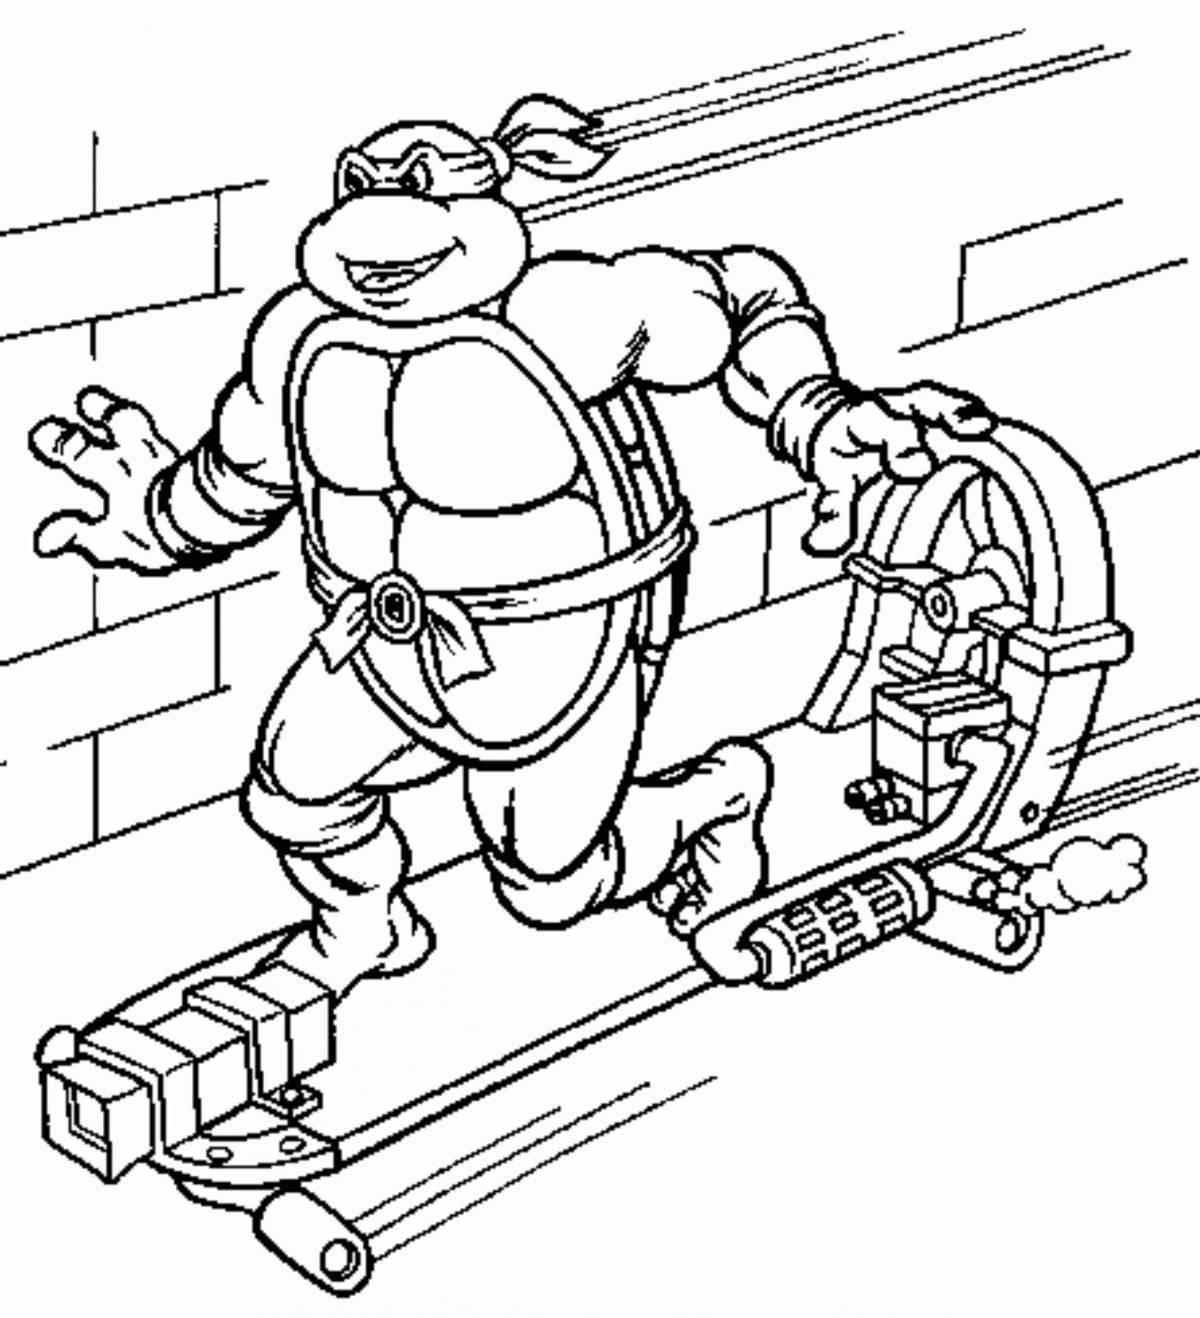 Coloring page brave ninja turtle